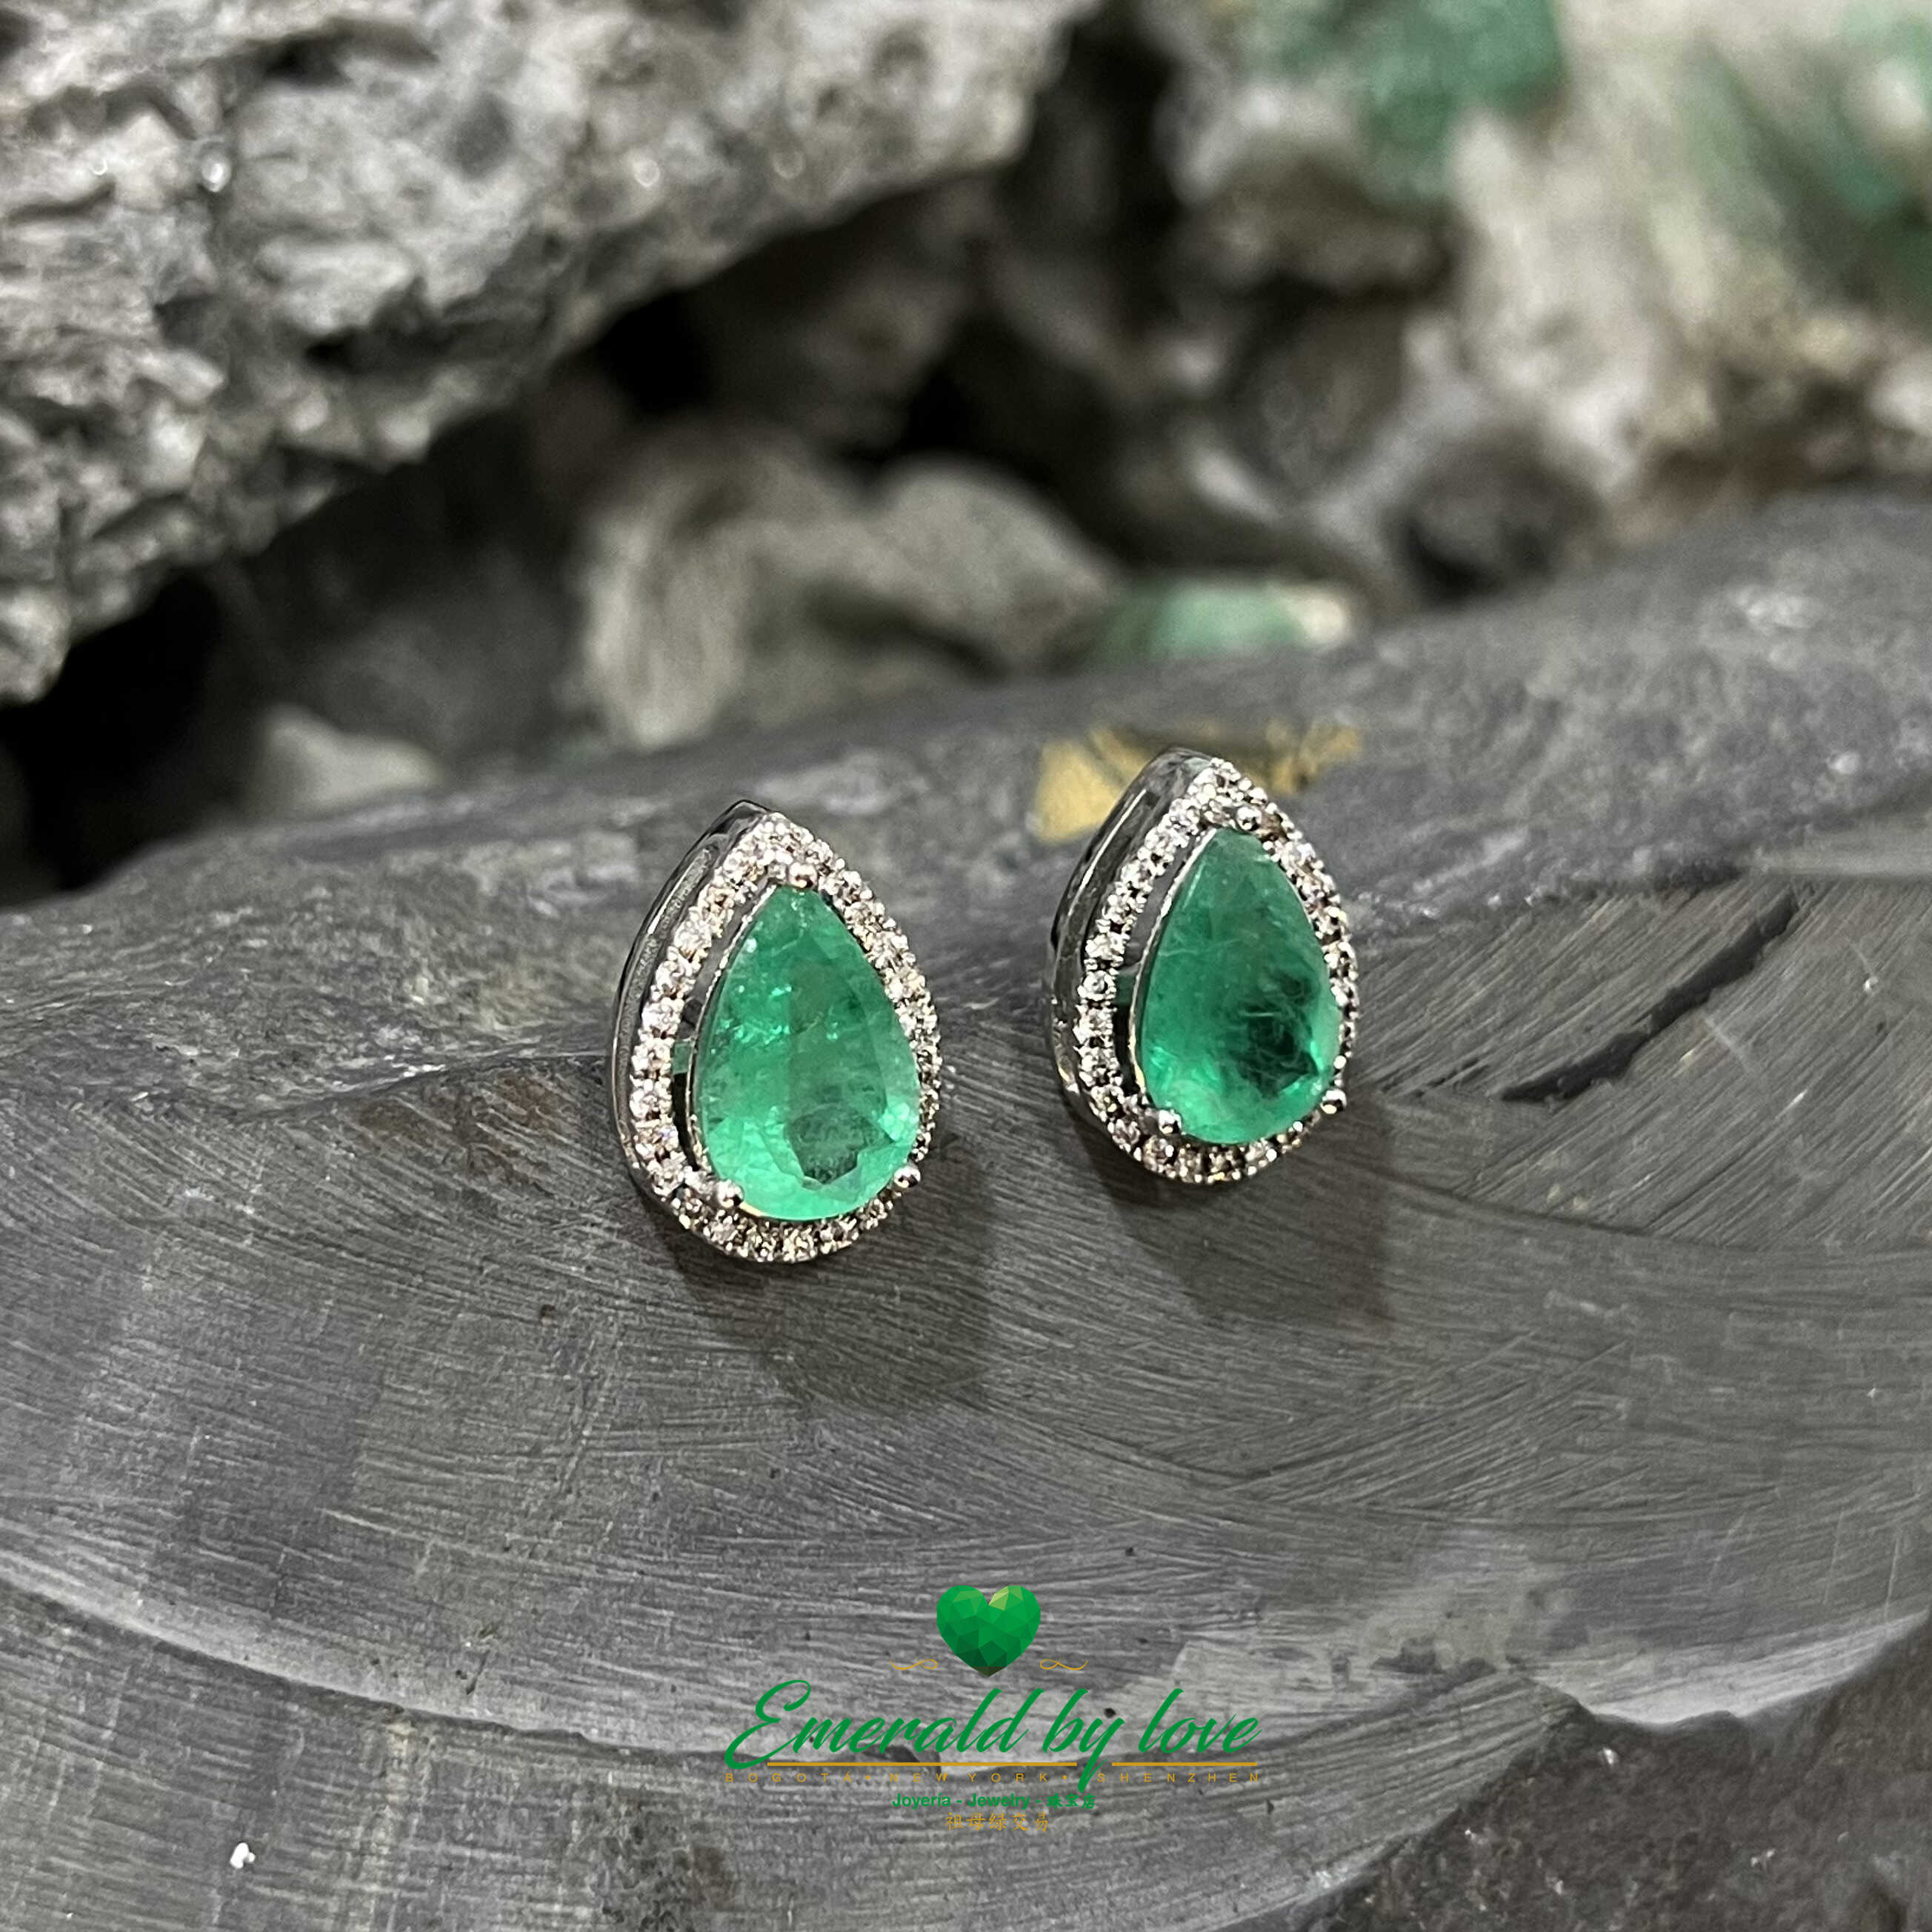 Stunning White Gold Marquise Earrings: 6.36 TCW Tear-Drop Emeralds, 0.52 TCW Diamonds